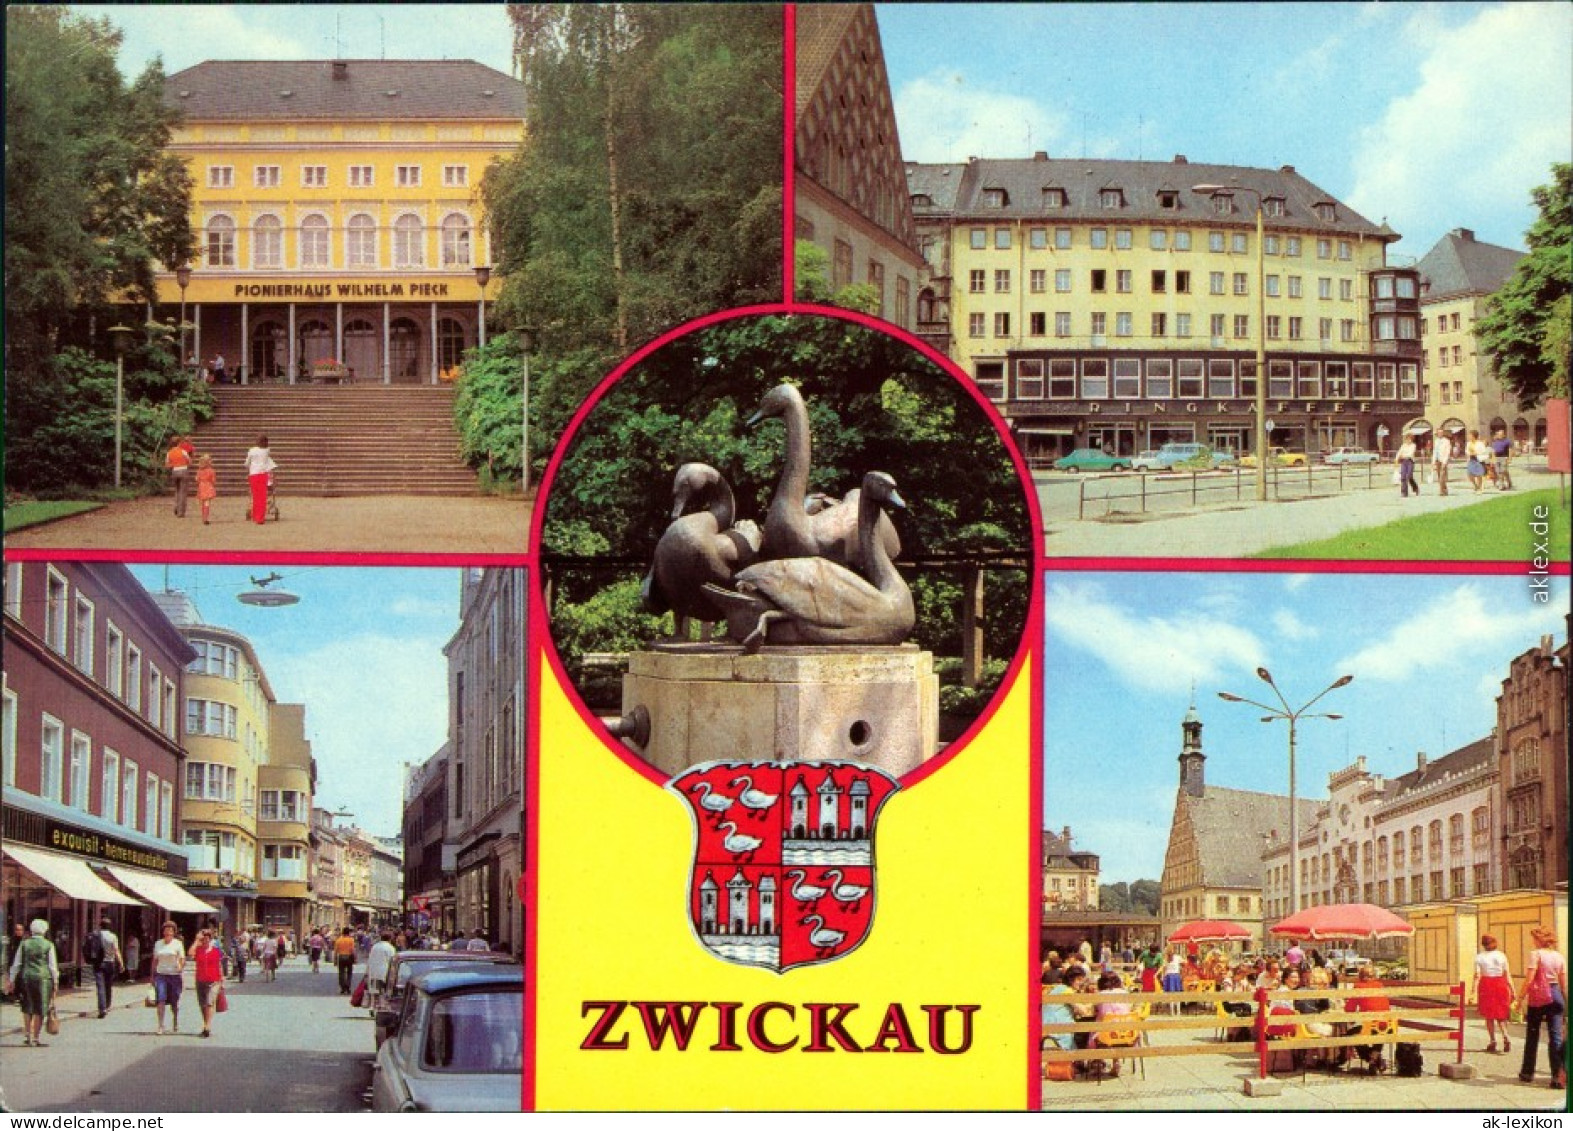 Zwickau Pionierhaus Wilhelm Pieck, Ringkaffee,   Innere Plausche Straße 1981 - Zwickau